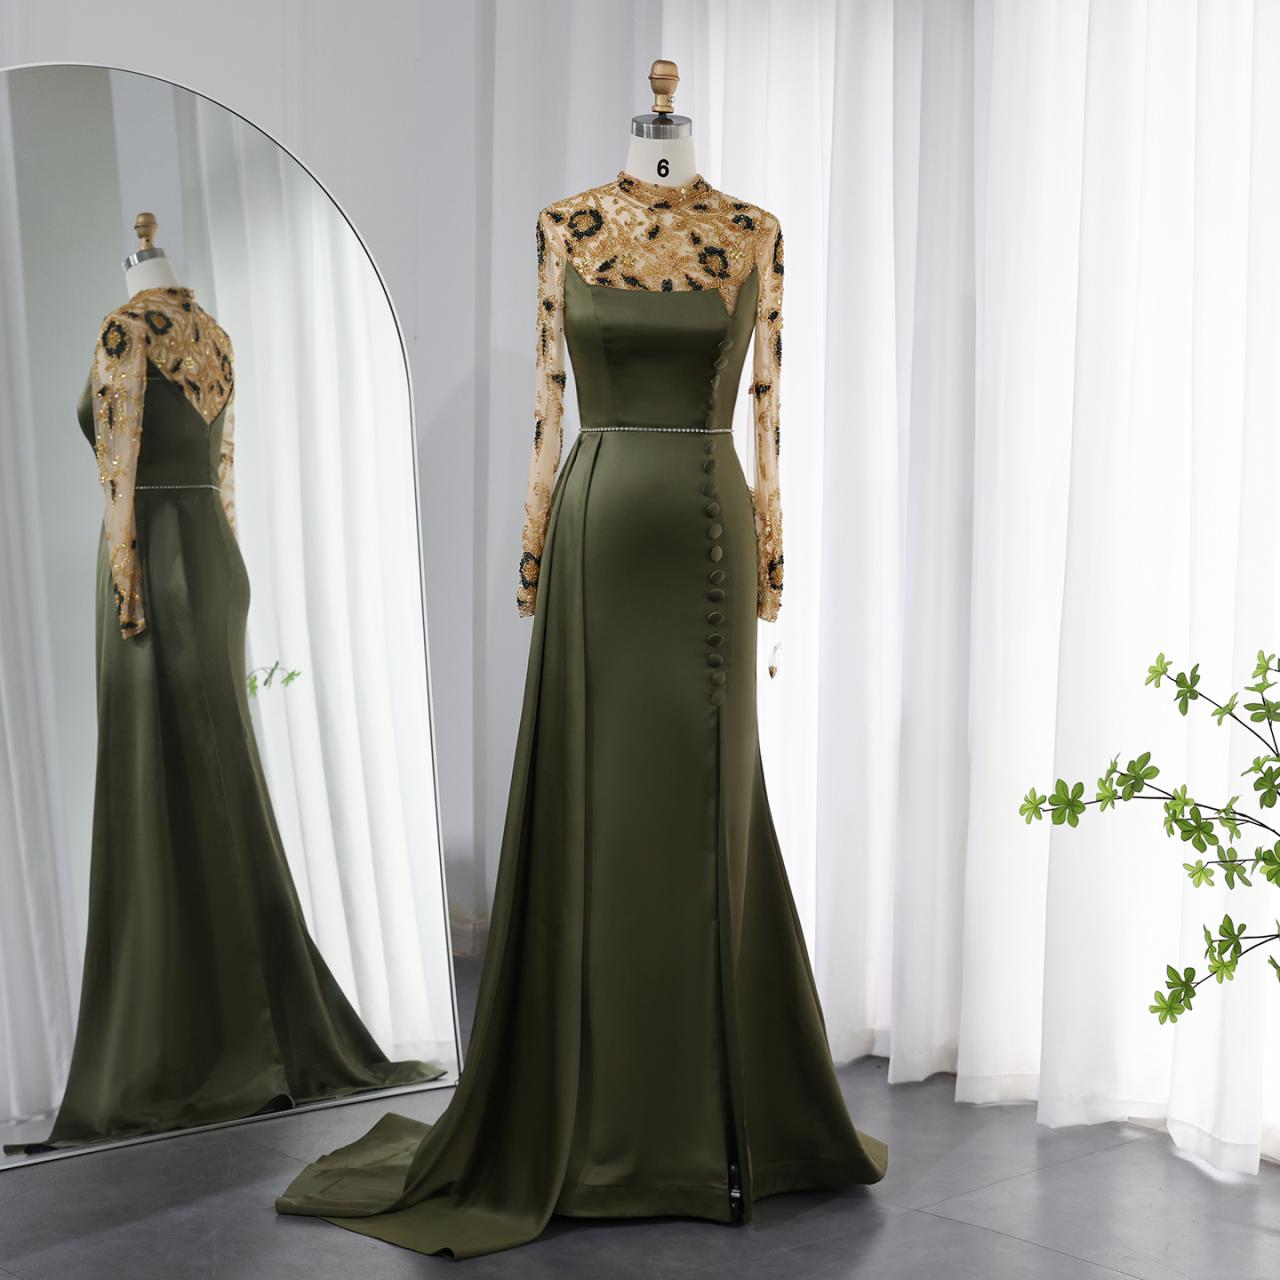 Luxury Dubai Olive Green Mermaid Evening Dress For Women Wedding Elegant Long Sleeve Muslim Formal Party Gowns